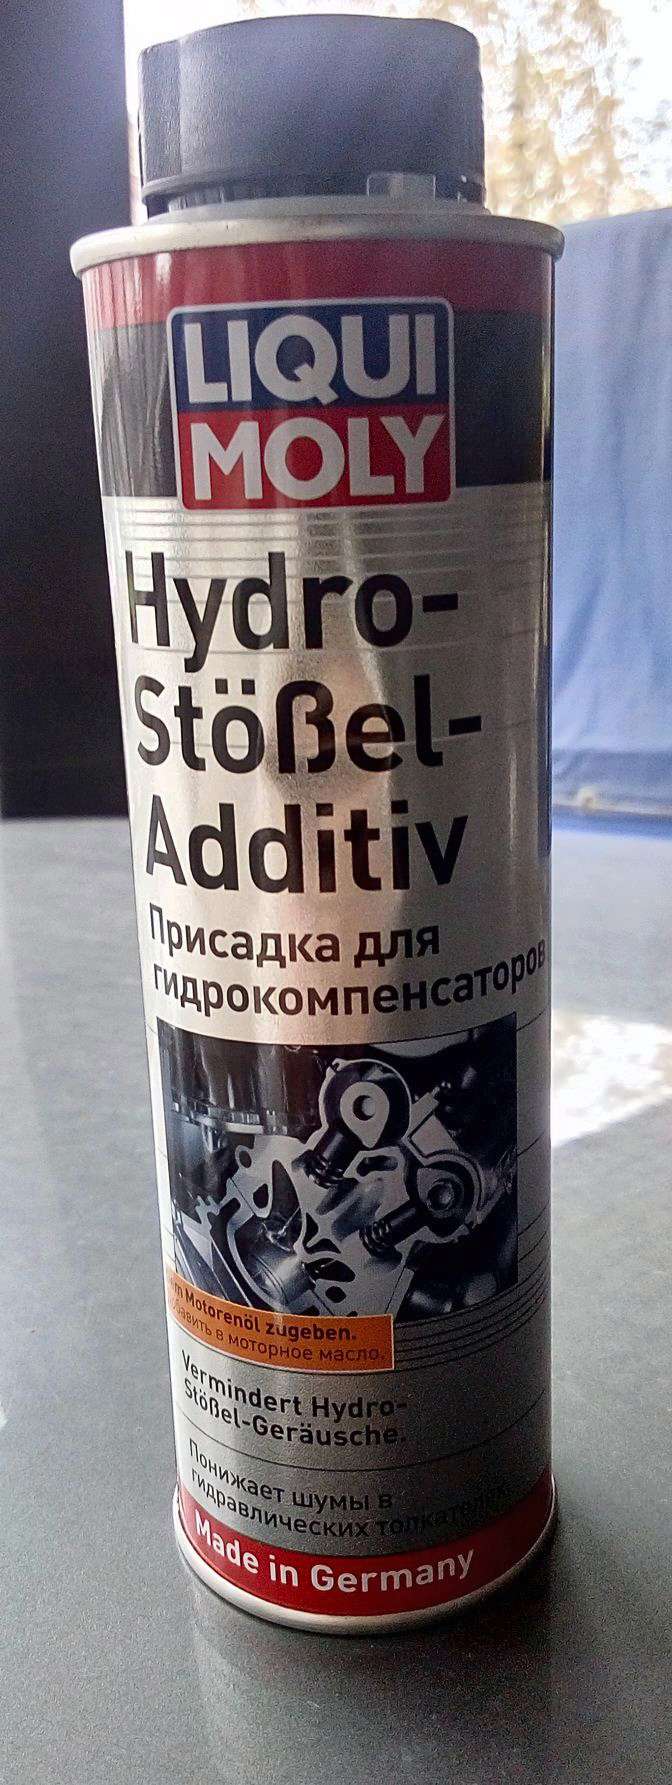 Liqui moly hydro stossel additiv. Присадка Ликви моли для гидрокомпенсаторов.